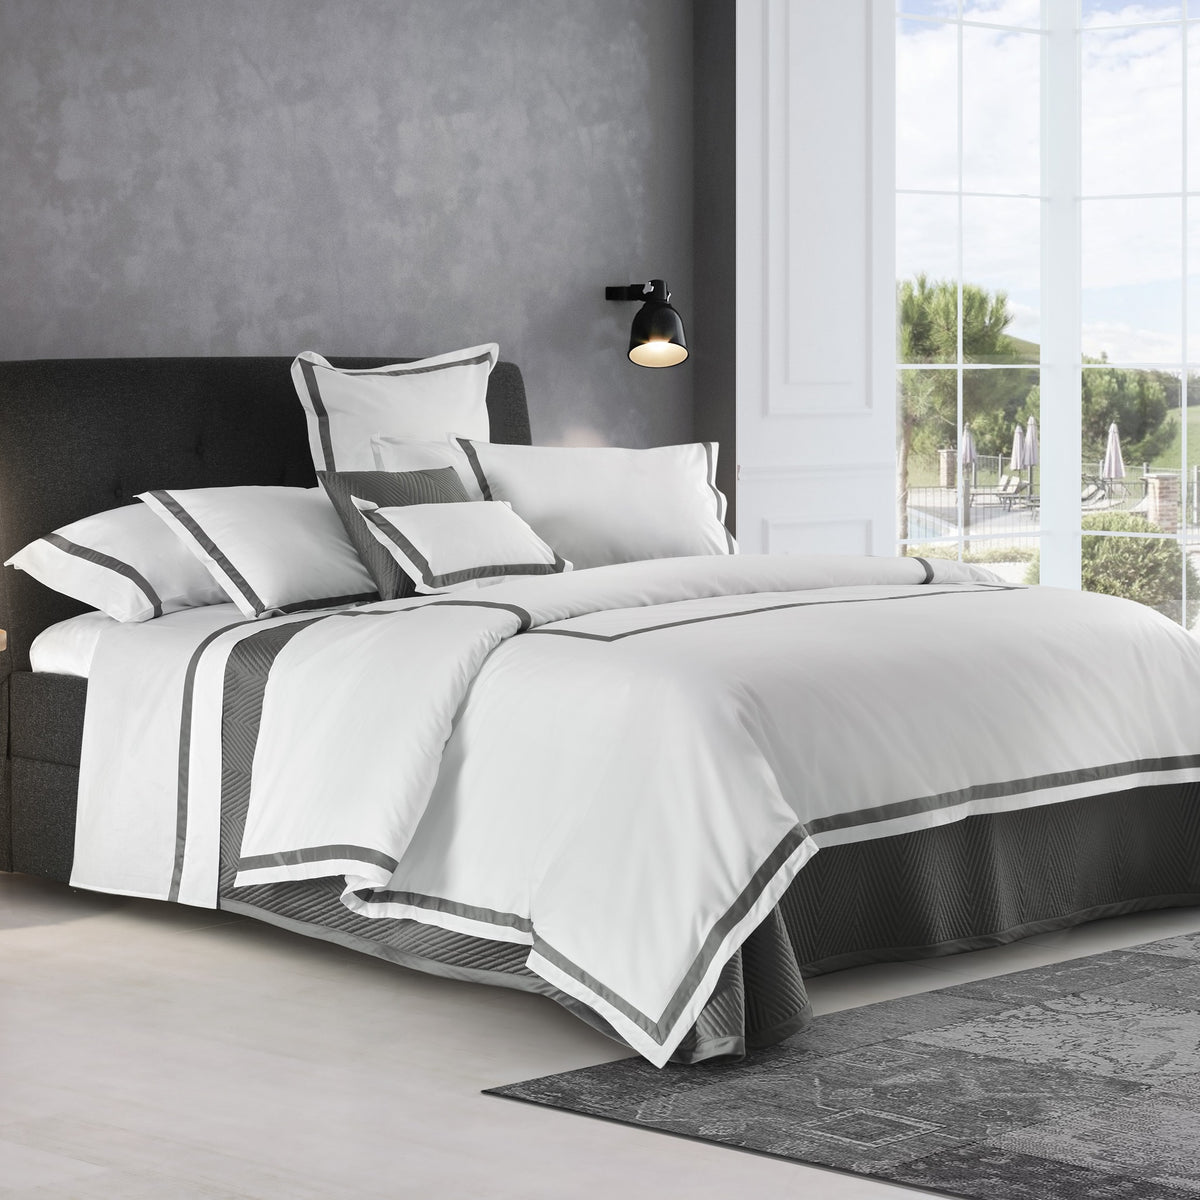 Full Bed Dressed in Signoria Pegaso Bedding in White/Lead Grey Color